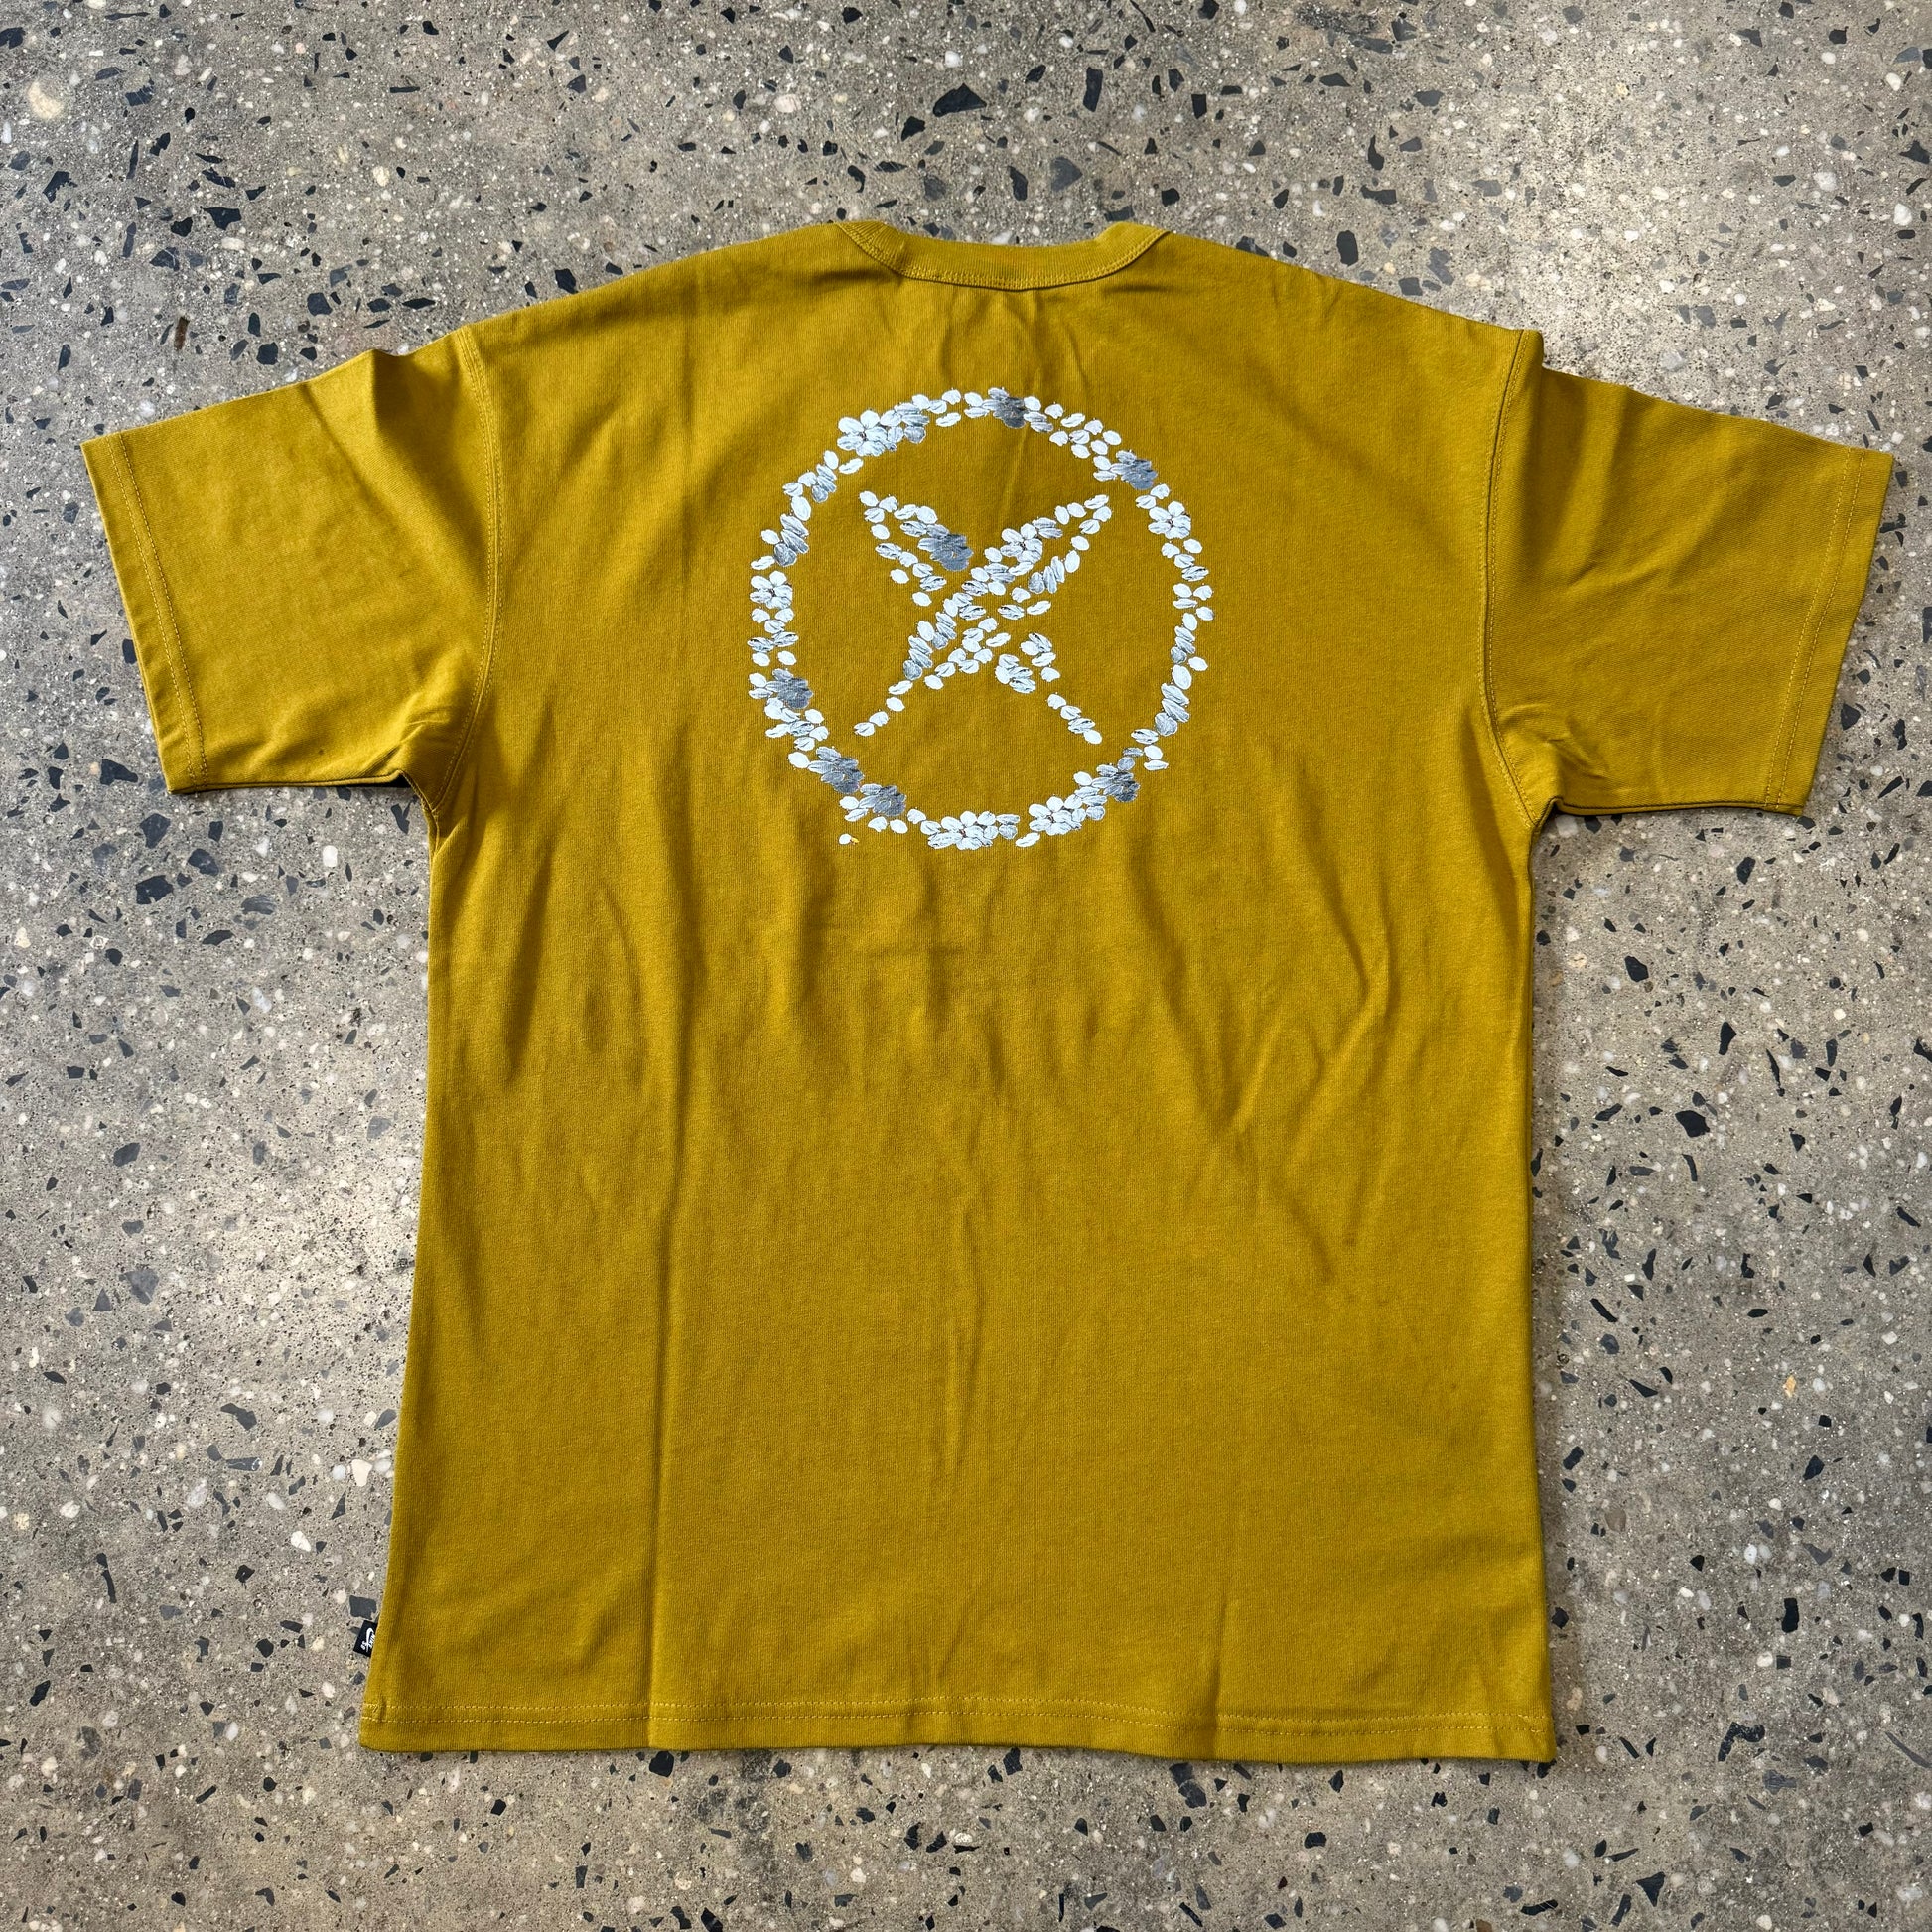 rear view of t-shirt, white circle yuto logo printed on back